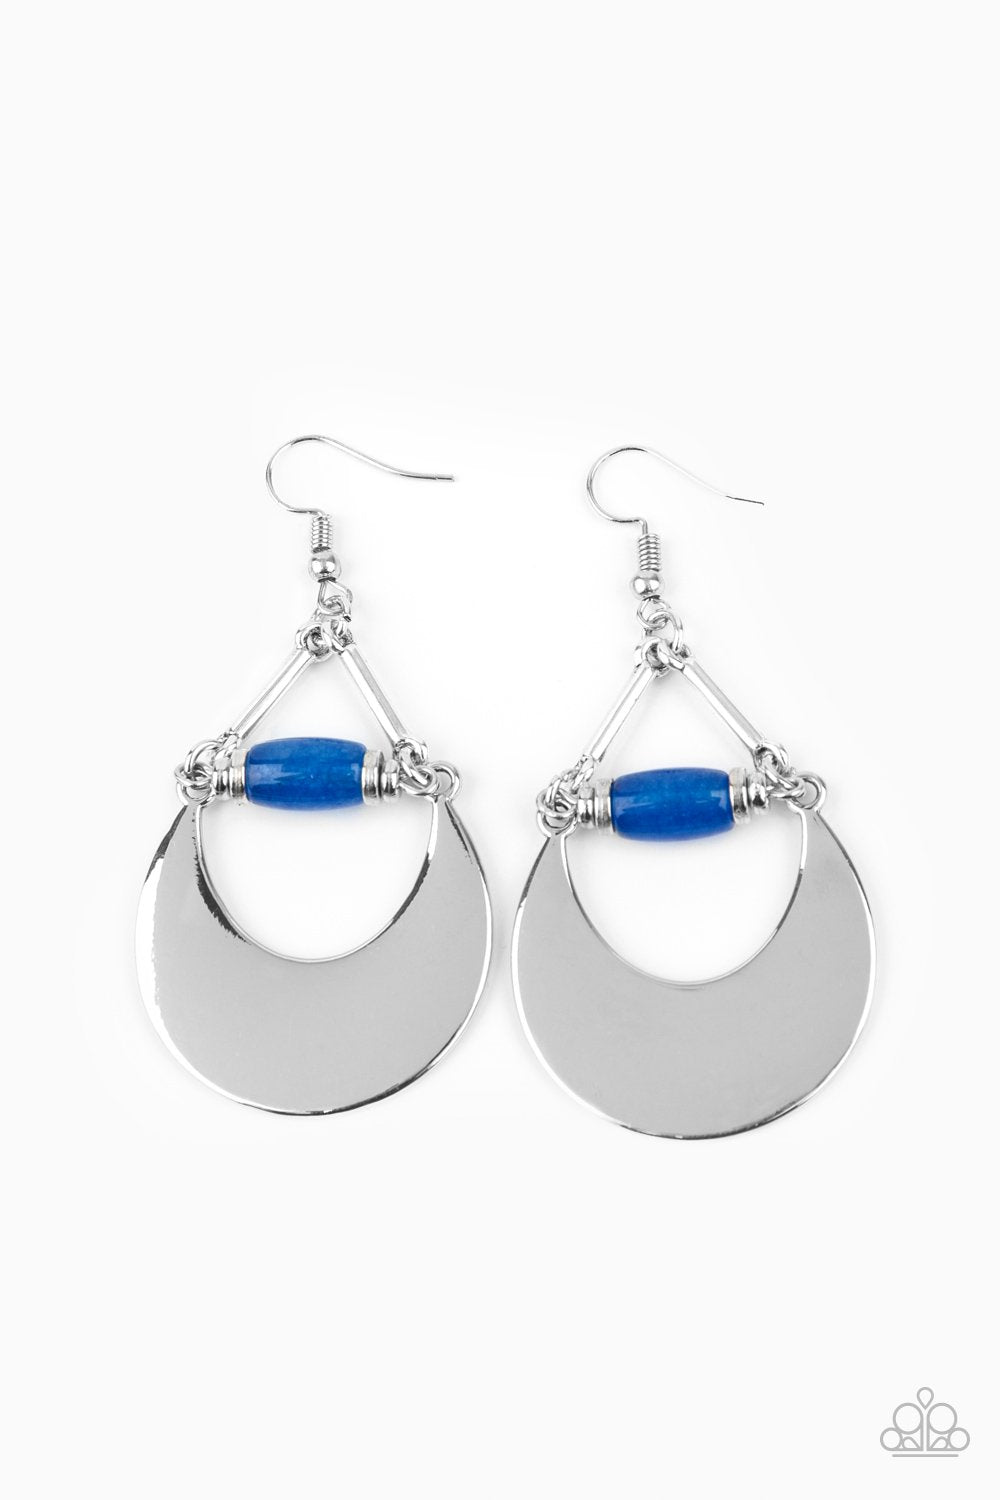 Mystical Moonbeams - Blue Earring freeshipping - JewLz4u Gemstone Gallery